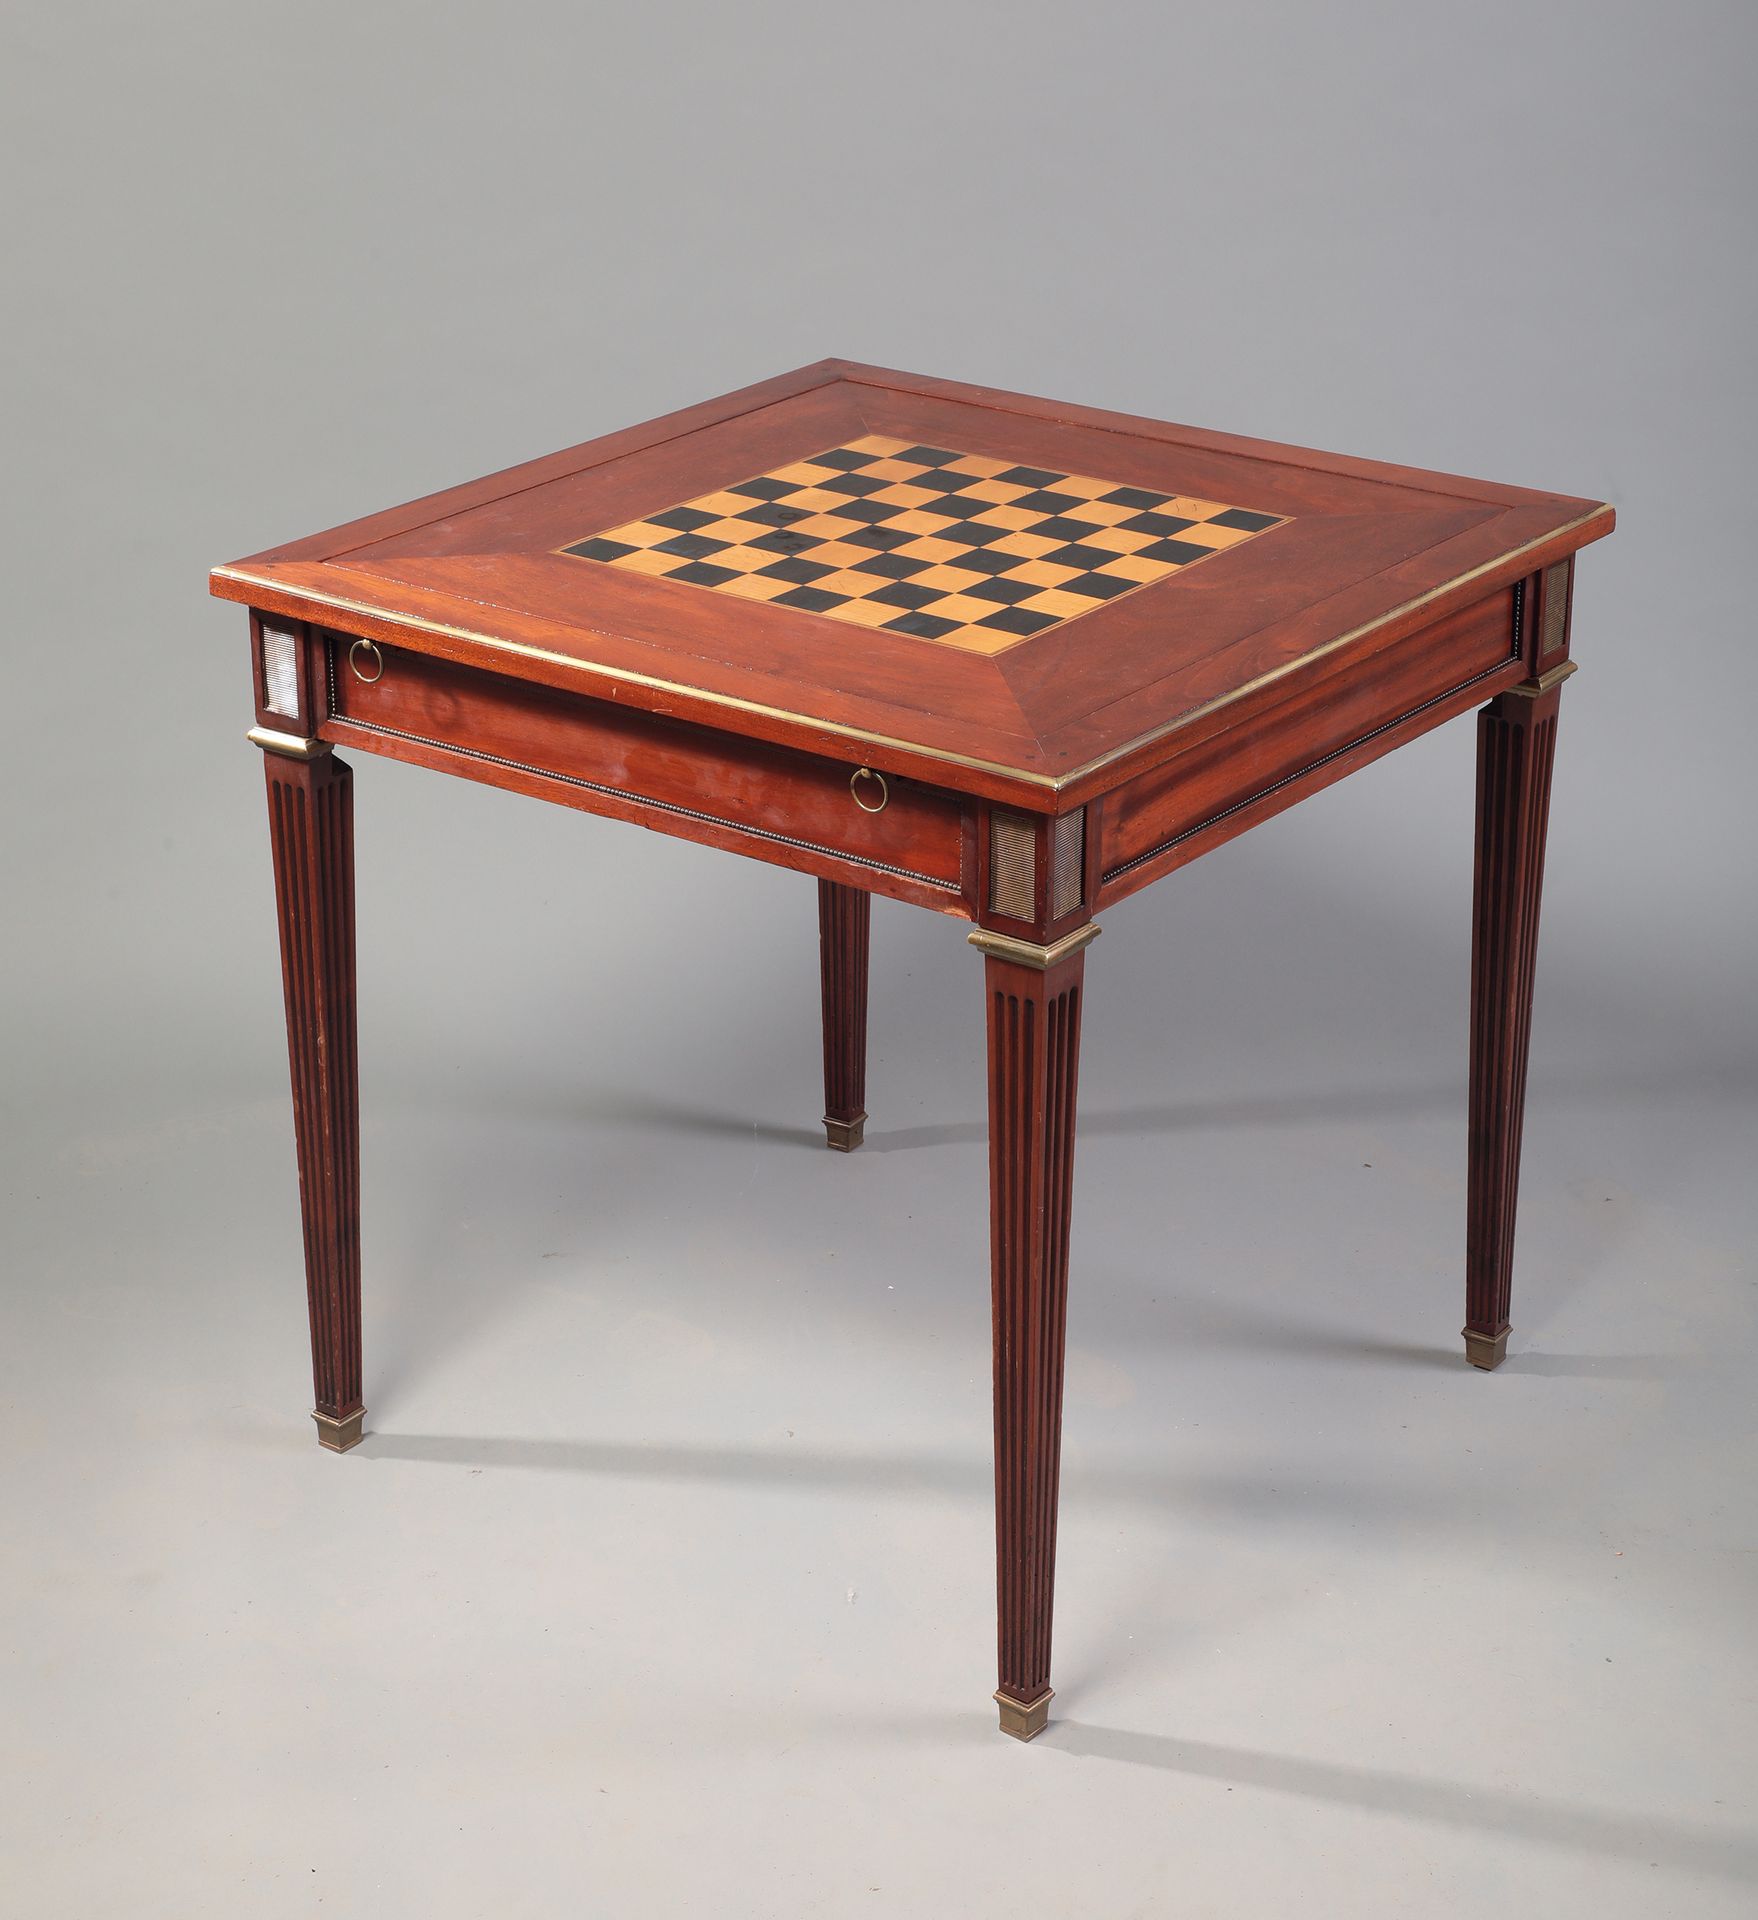 Null 方形红木游戏桌，两面旋转的桌面，有棋盘和棋子。

jaquet和棋盘游戏，凹槽 "Gaine "腿。

饰有珍珠楣和刮刀。

路易十六风格，19世纪
&hellip;